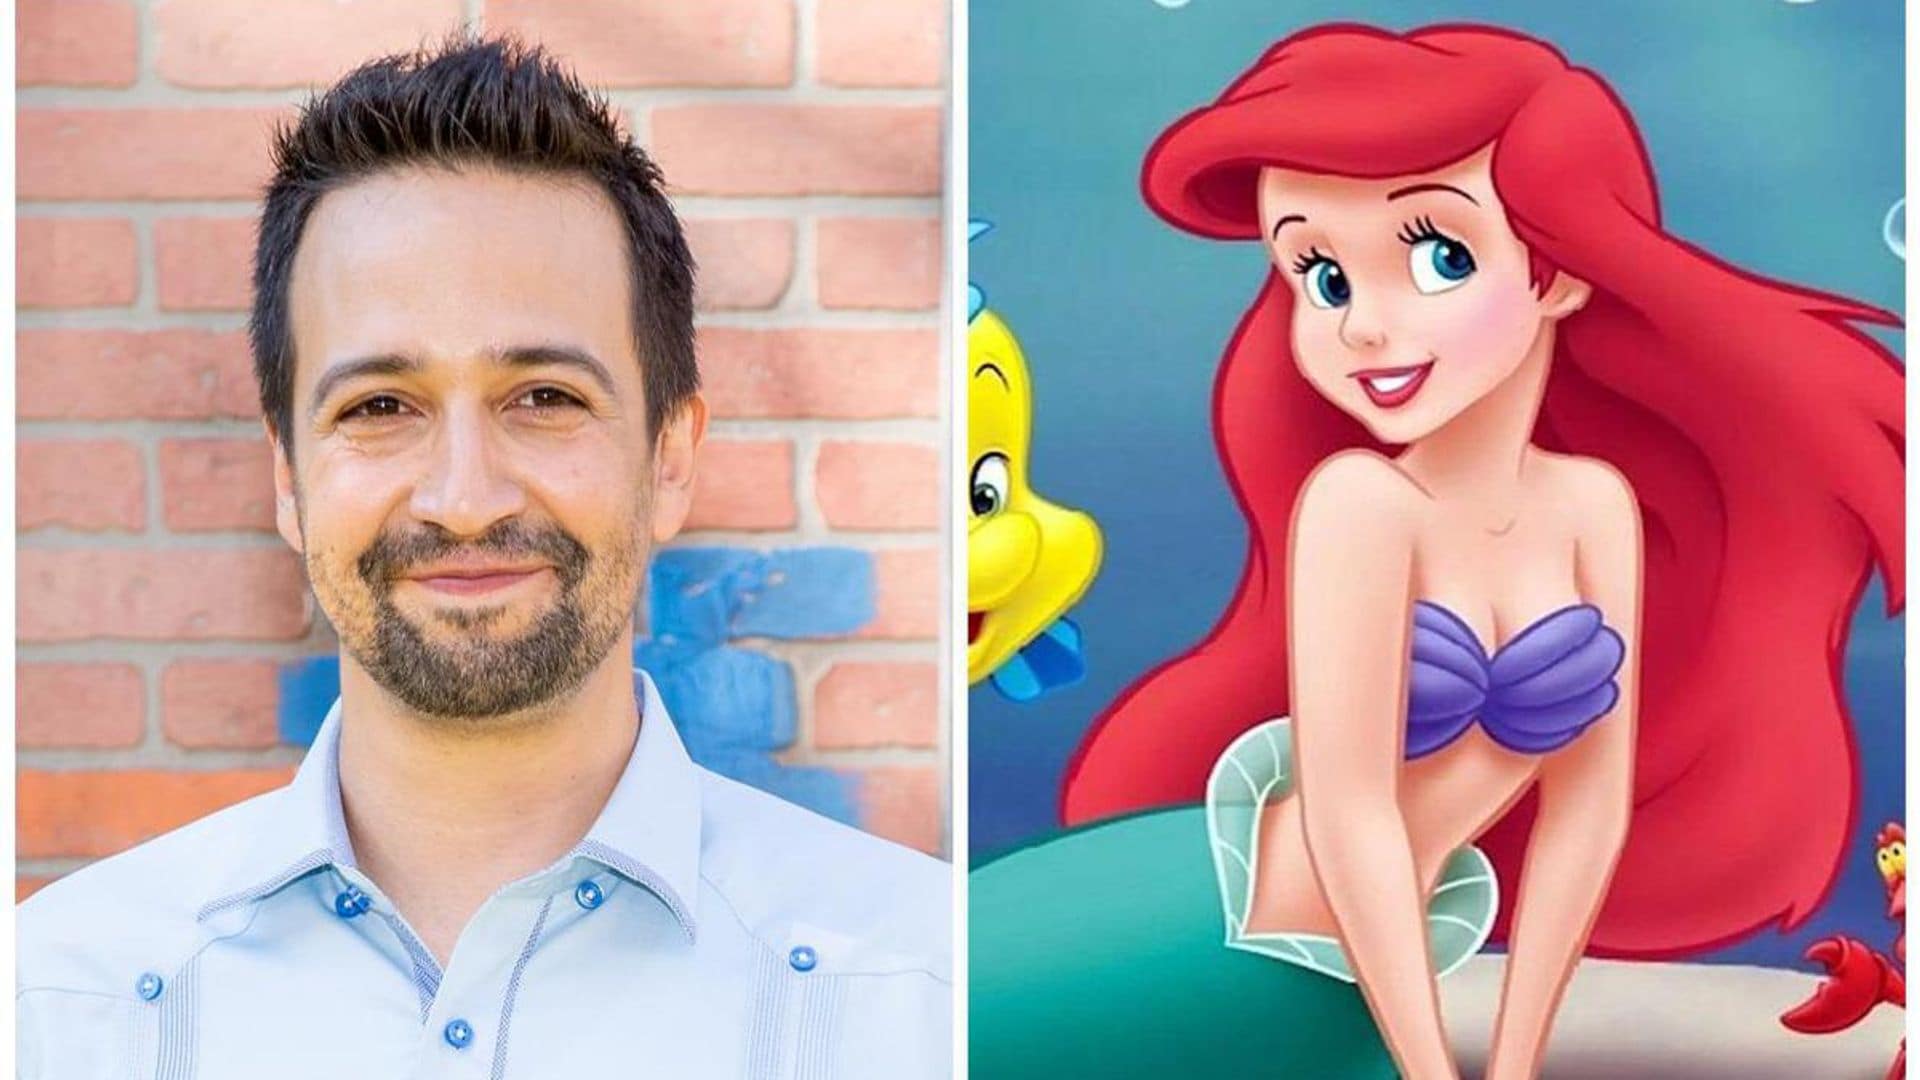 Lin-Manuel Miranda creates a special song for Ariel in Disney's 'The Little Mermaid'